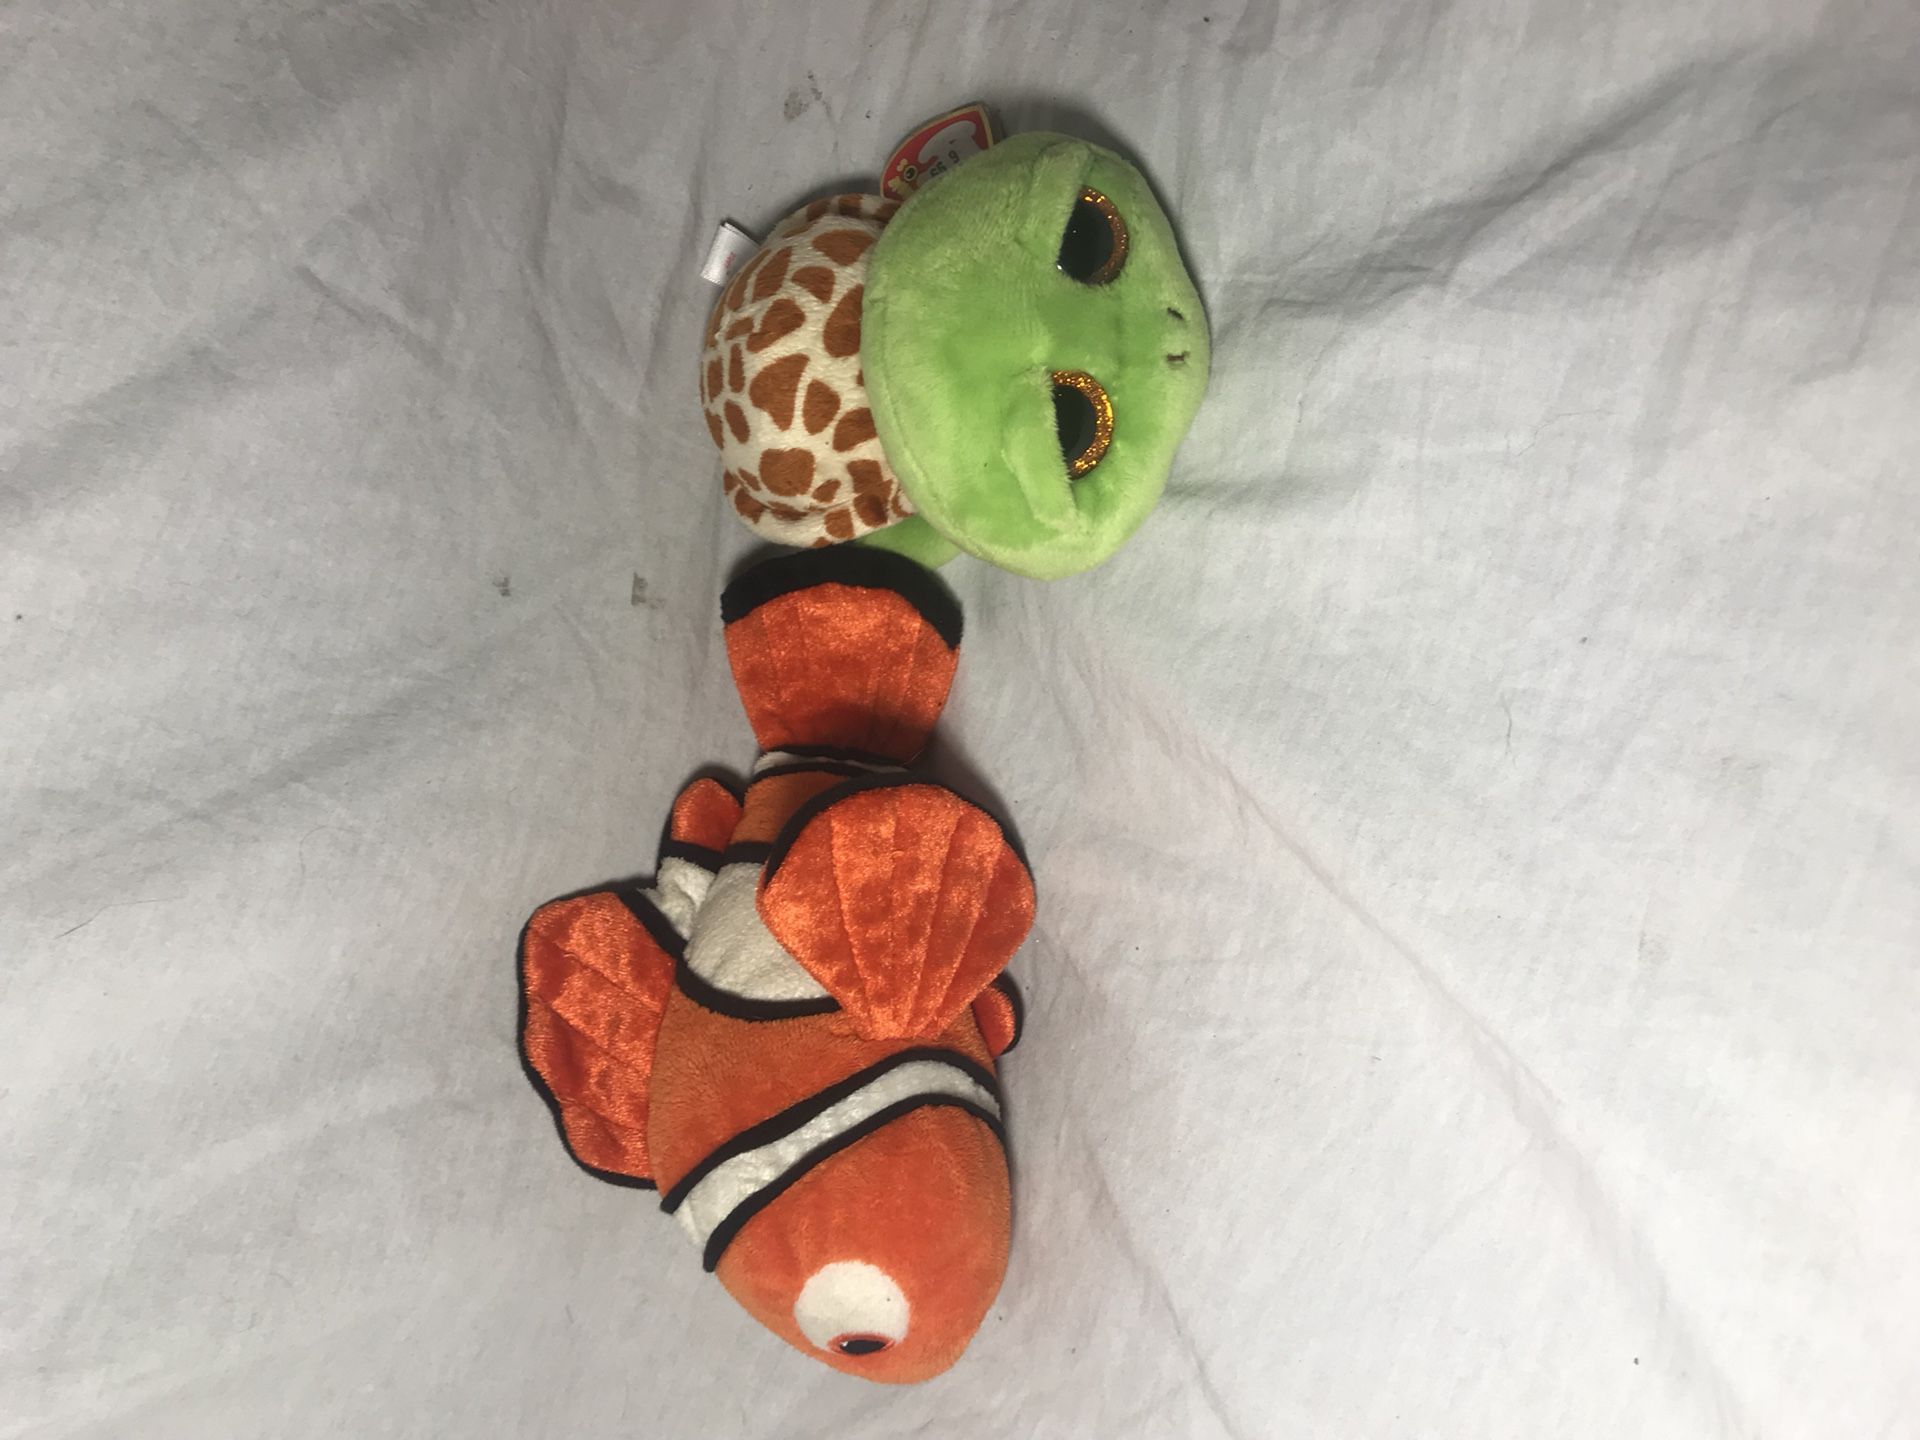 Finding Nemo & Baby Turtle Plush Toys